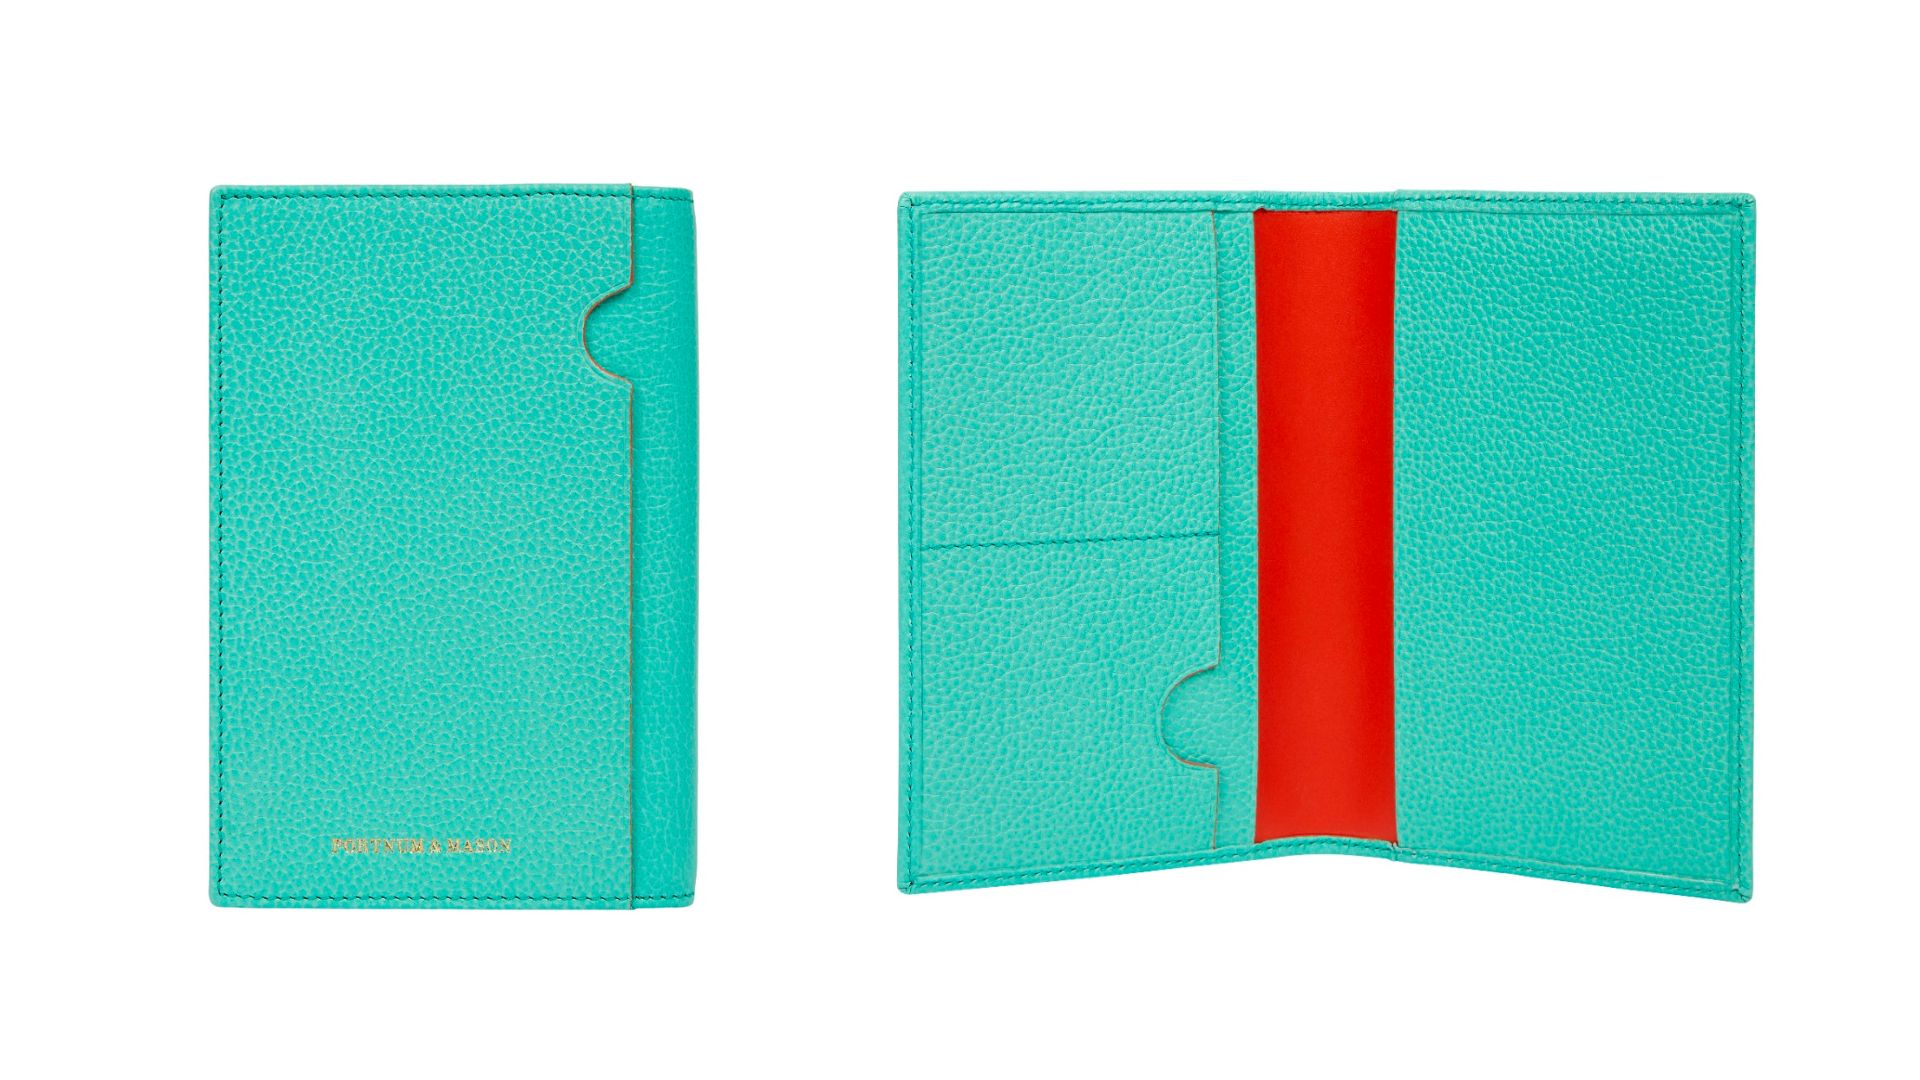 Designer Passport Covers